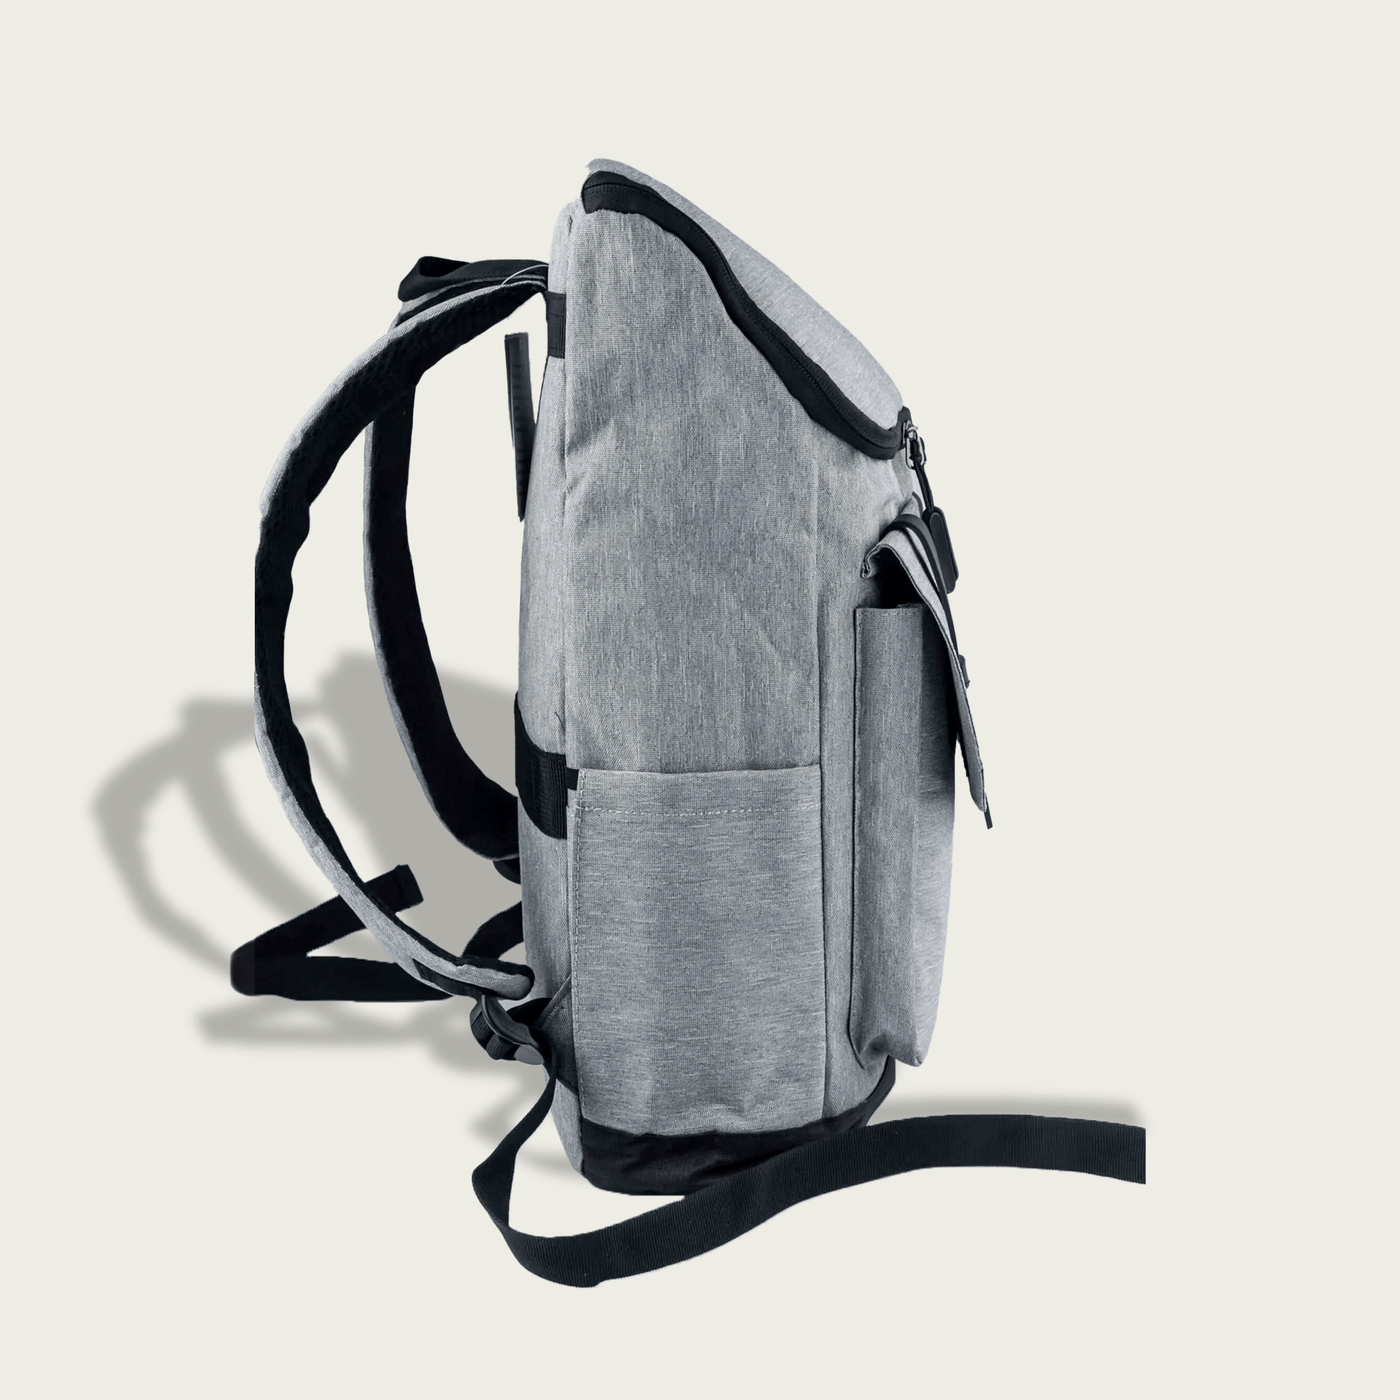 Travel Laptop Backpack Bag - Isiro Canada